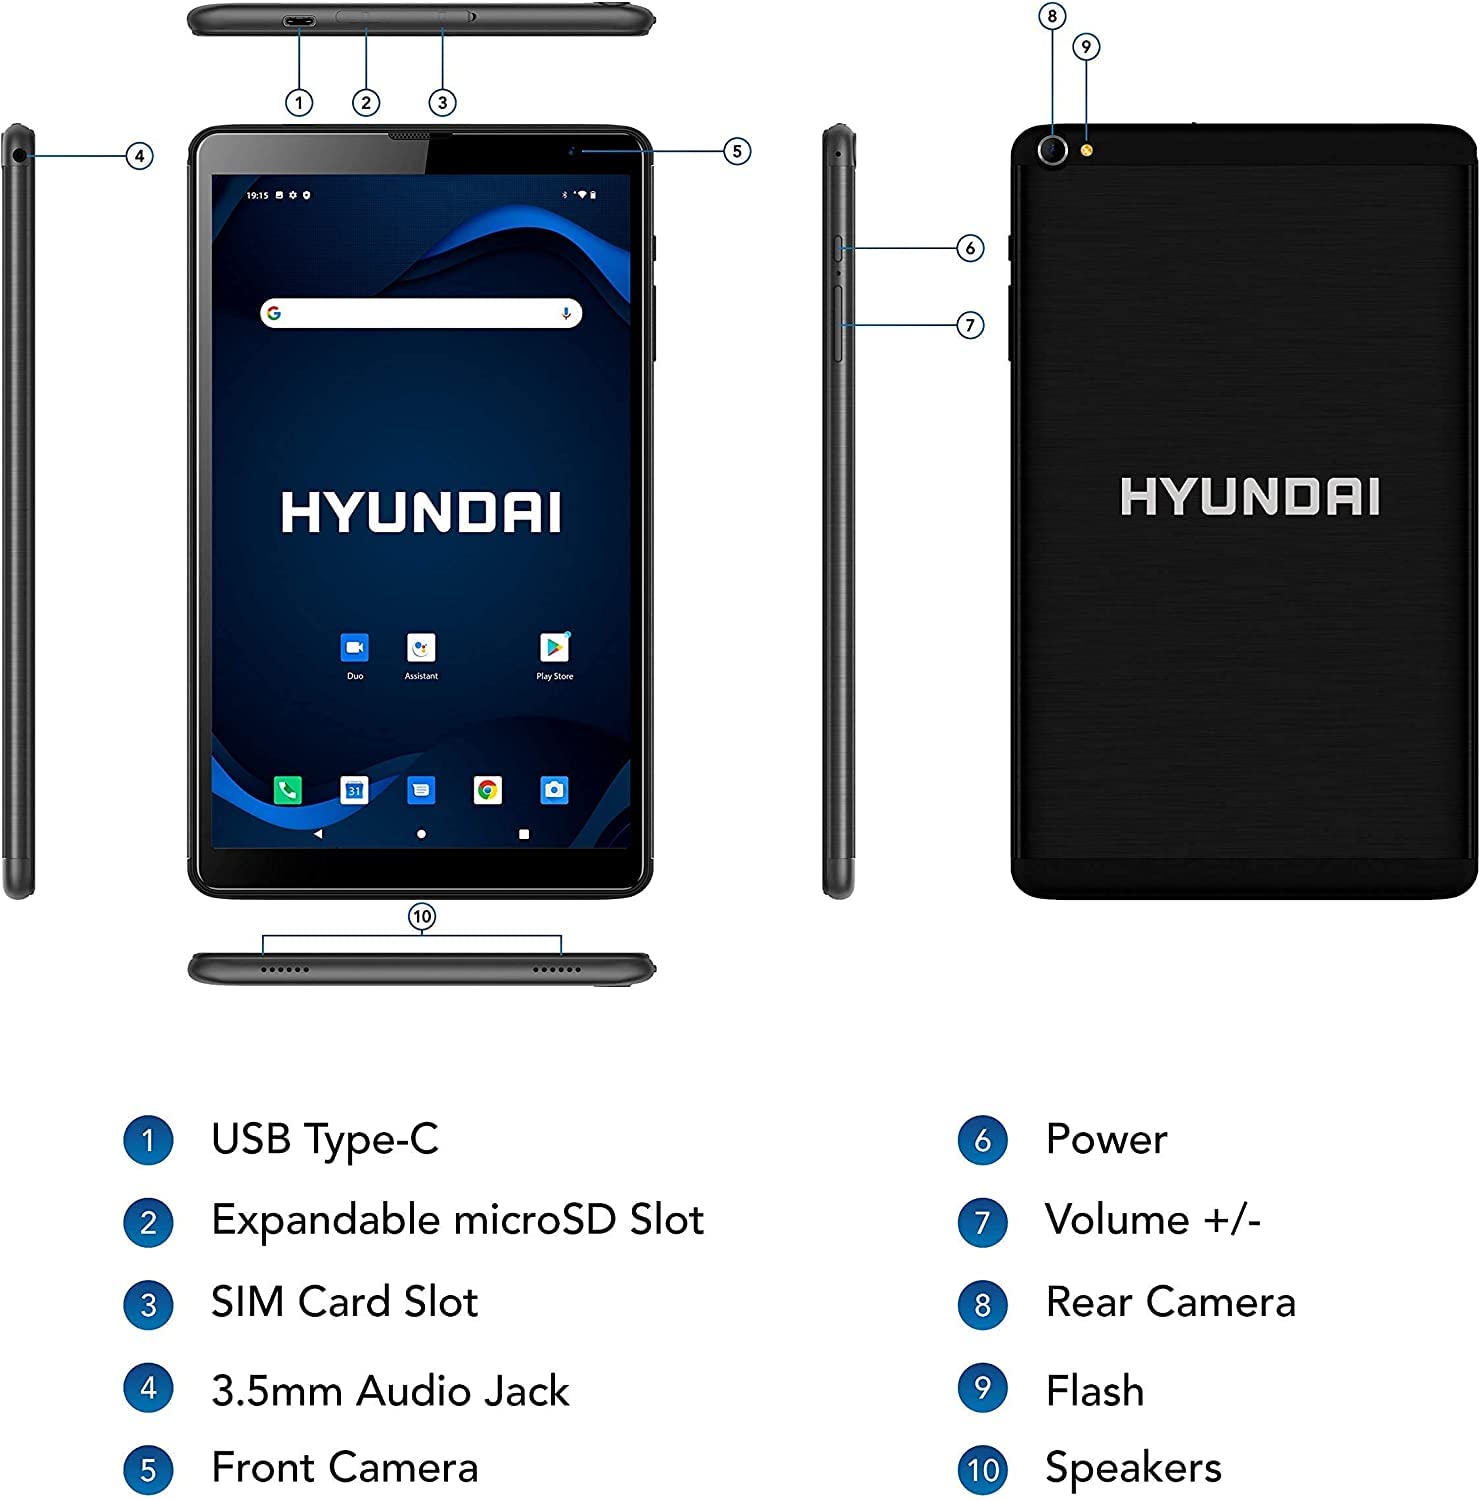 Hyundai HyTab Plus Tablet 8LB1 8" FHD Android Tablet IPS Display, Quad-Core Processor, Camera, WiFi & LTE,32GB Storage,2GB RAM Android 10 Go Edition - Black